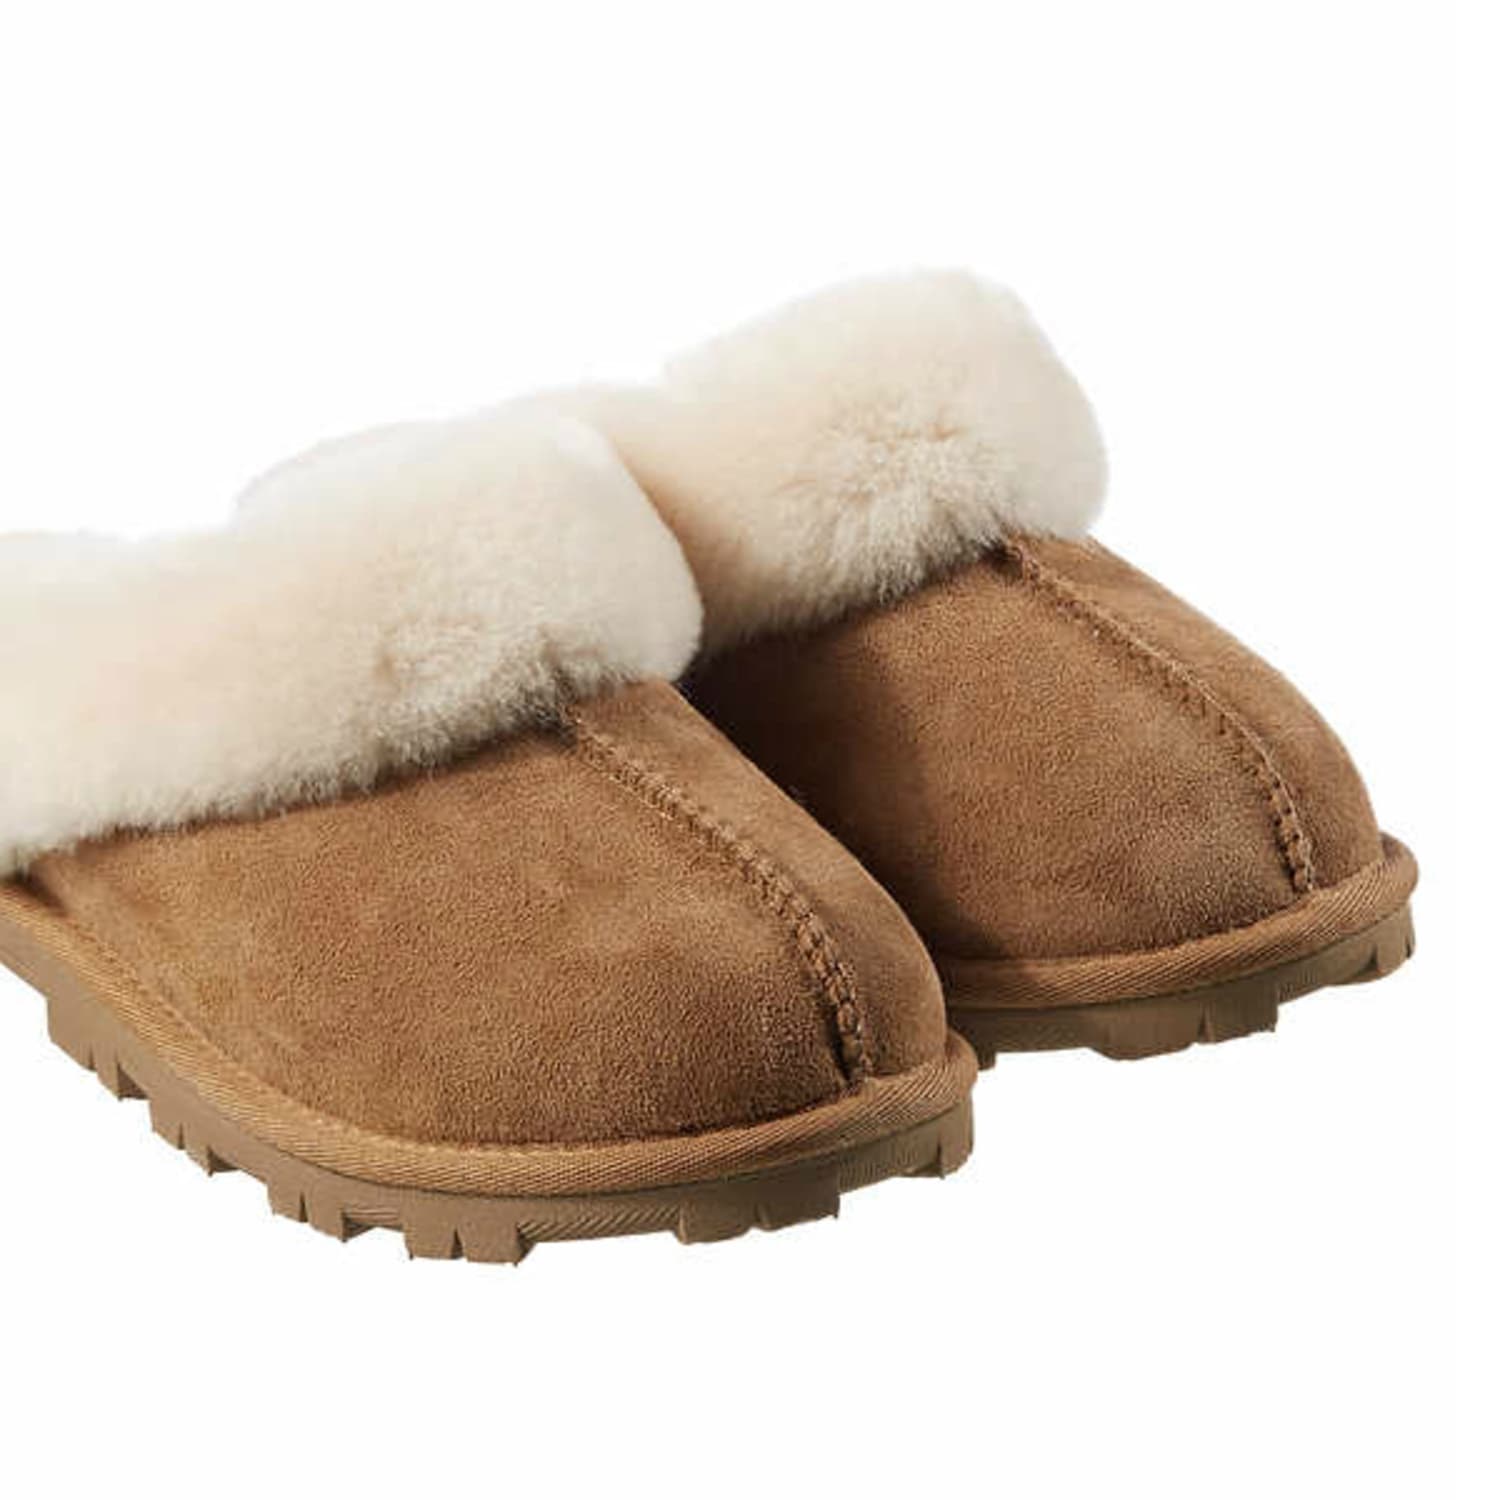 ugg look alike slippers